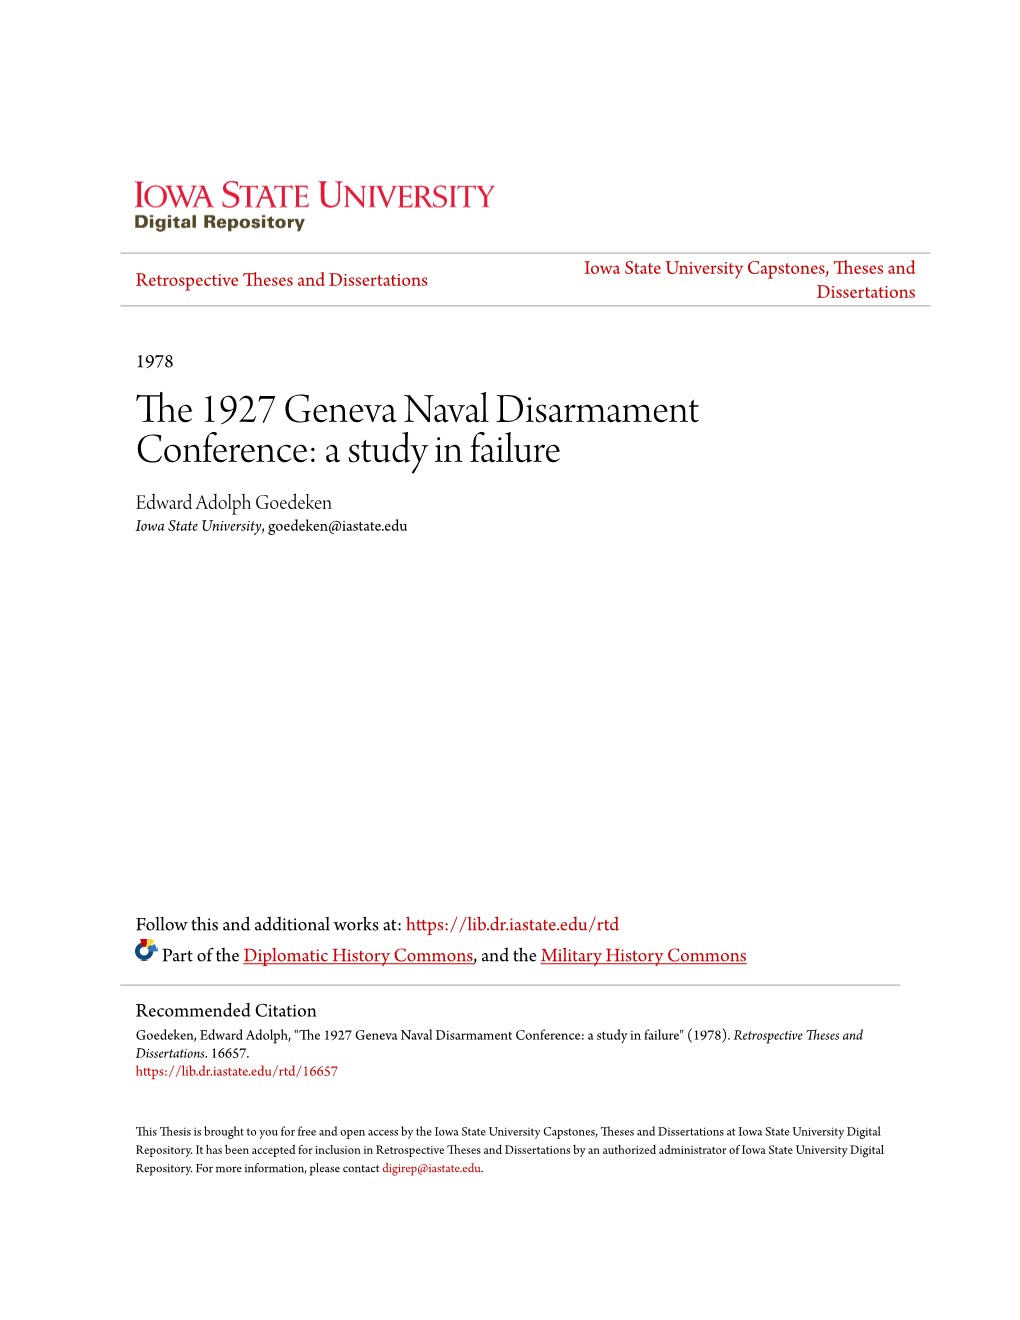 The 1927 Geneva Naval Disarmament Conference: a Study in Failure Edward Adolph Goedeken Iowa State University, Goedeken@Iastate.Edu